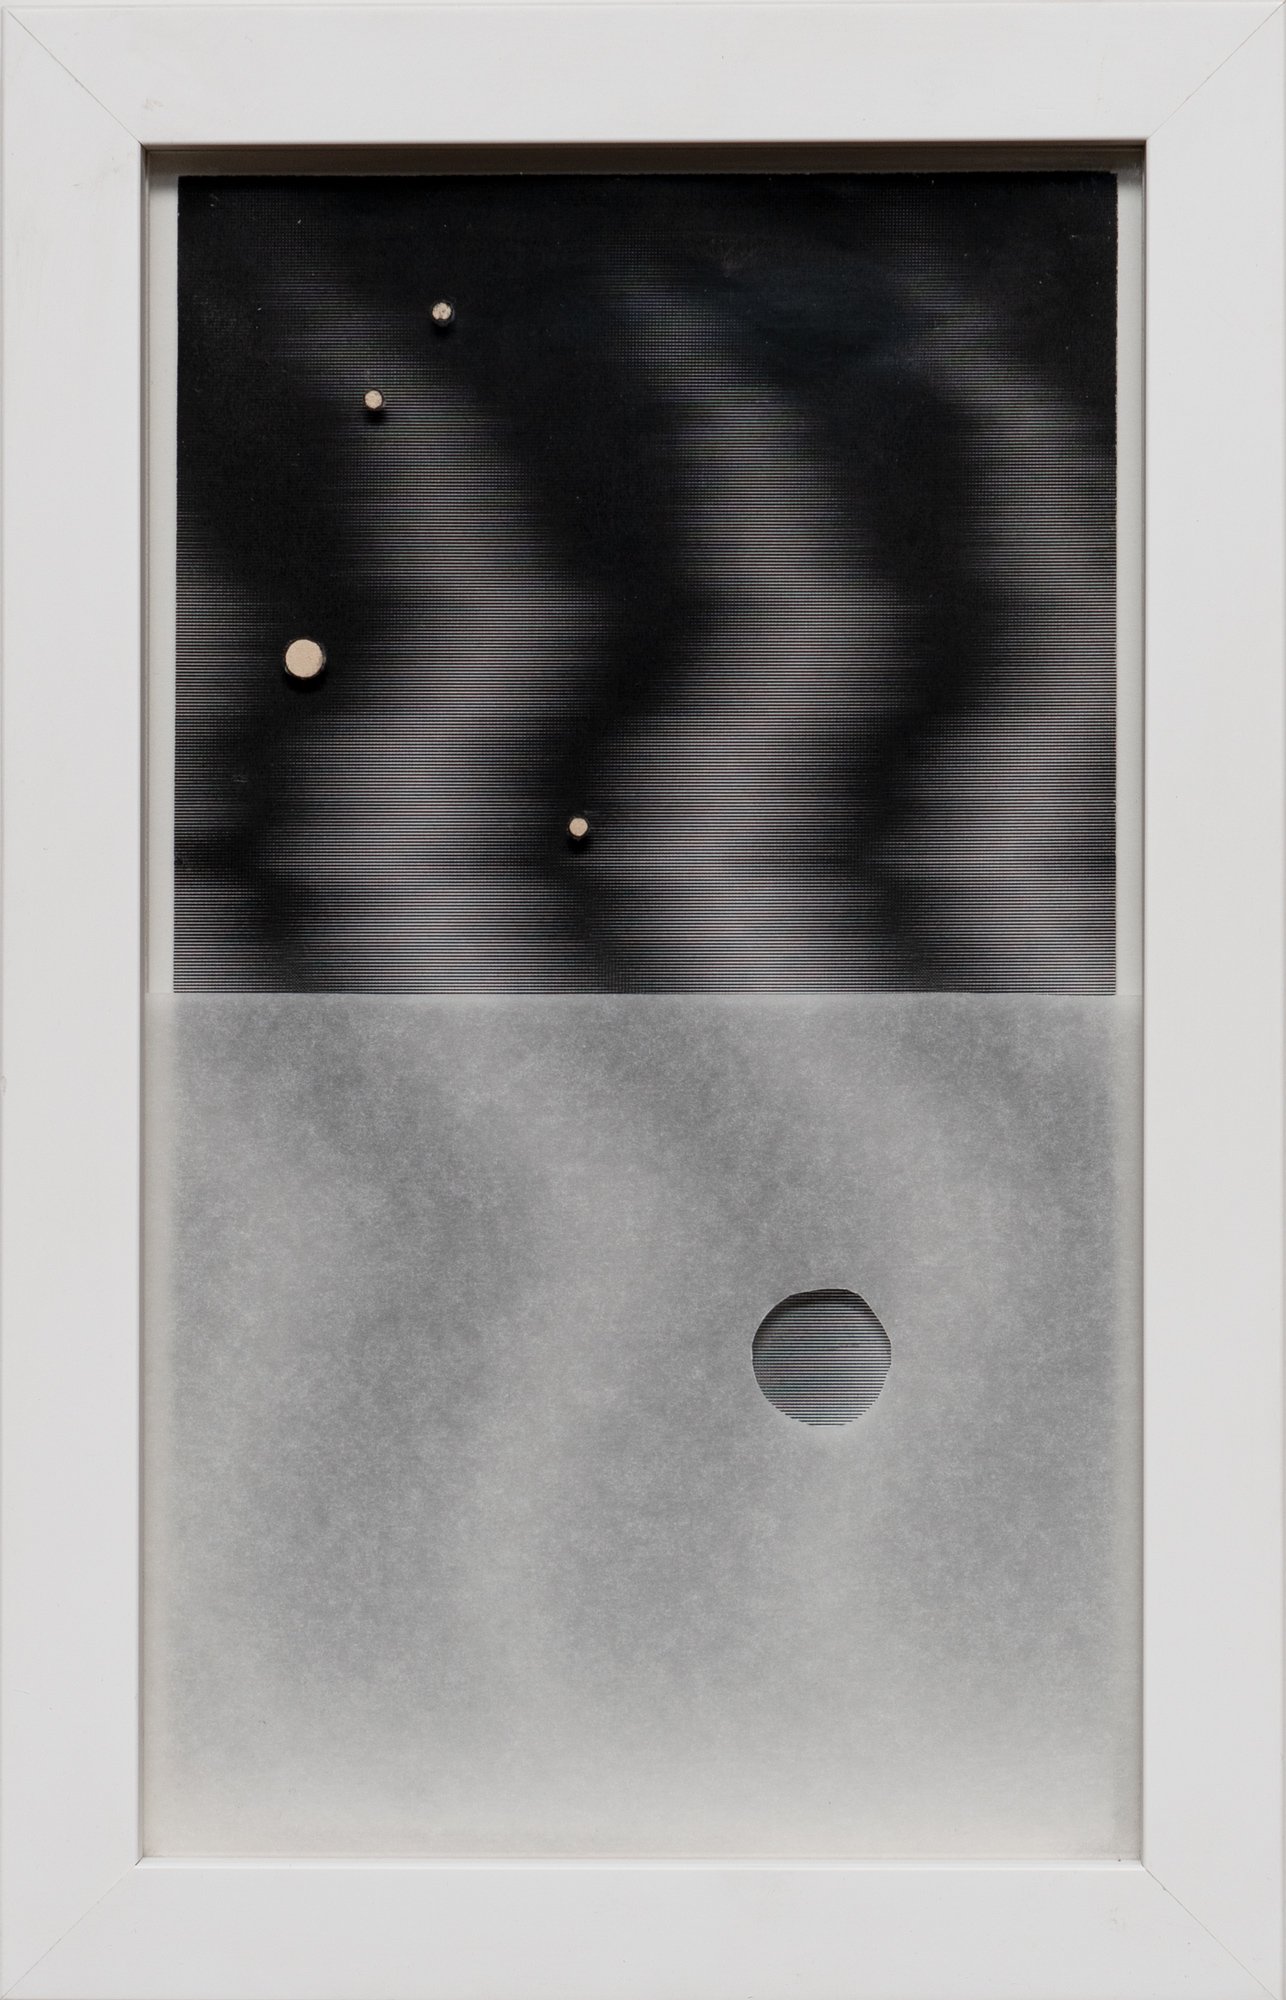    Untitled Construction #2   2013, inkjet print, vellum, glass 7.5” x 10.5” 